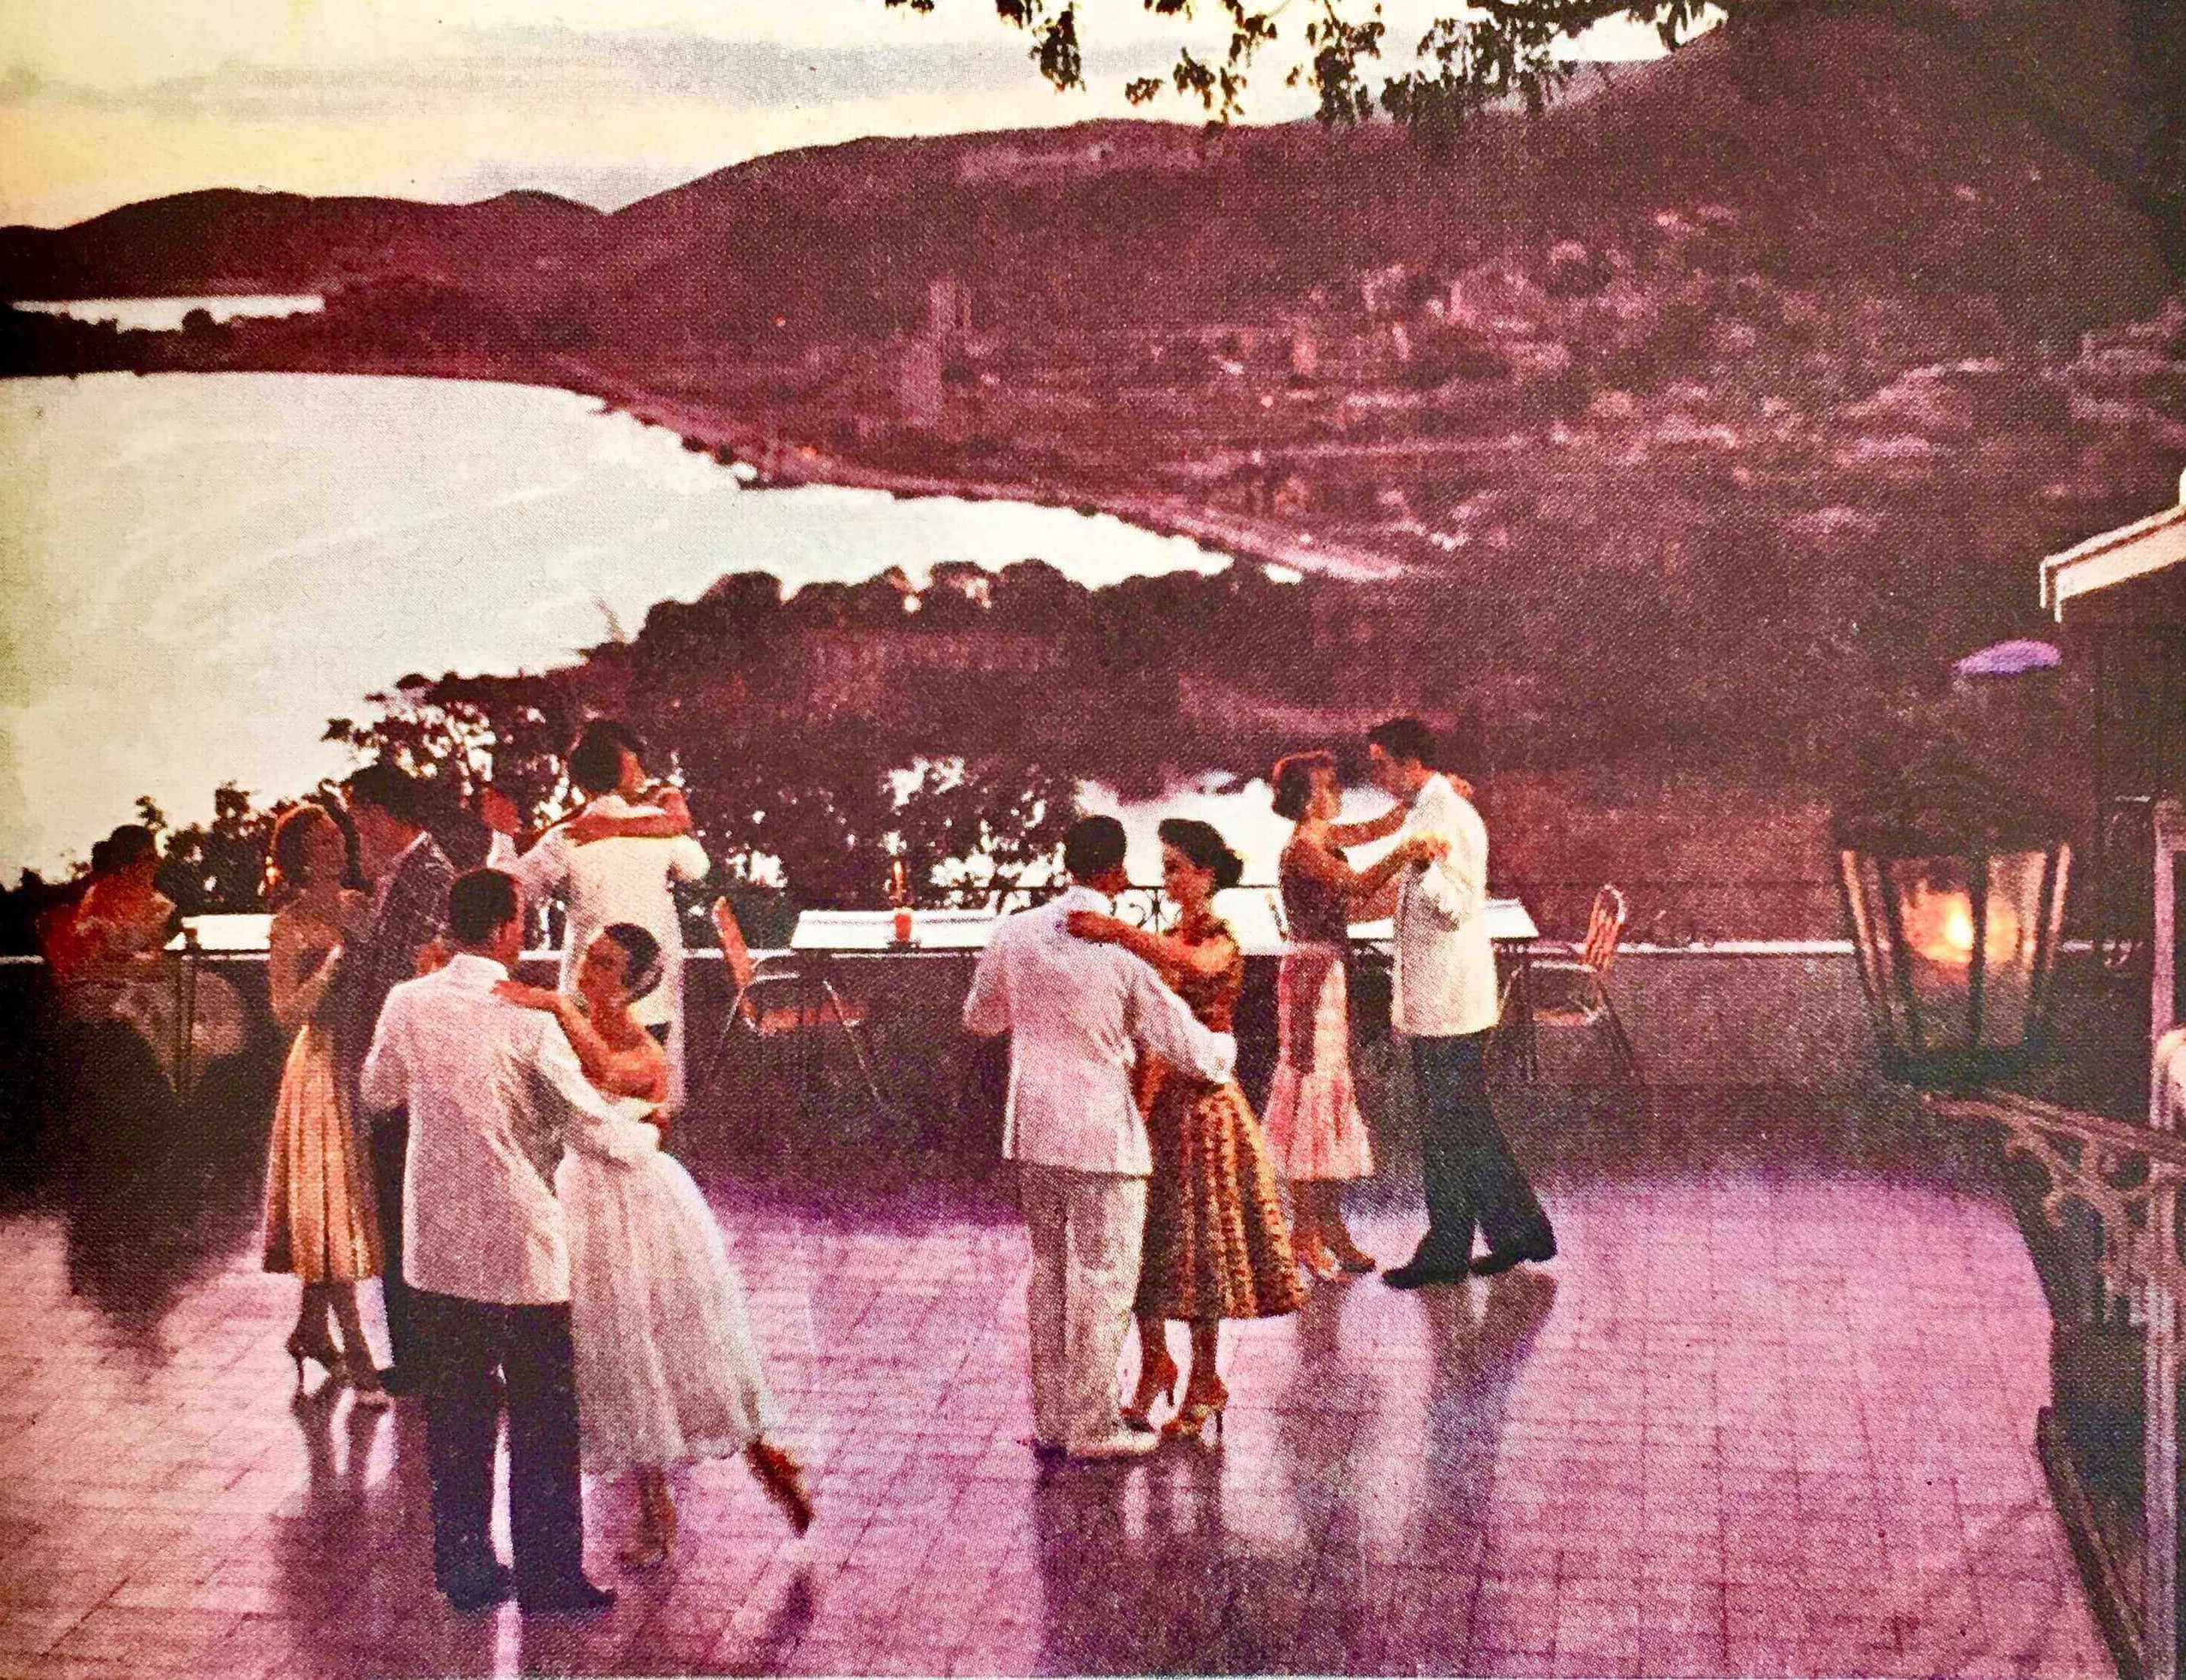 1956, Redbook Magazine about the romantic Virgin Islands